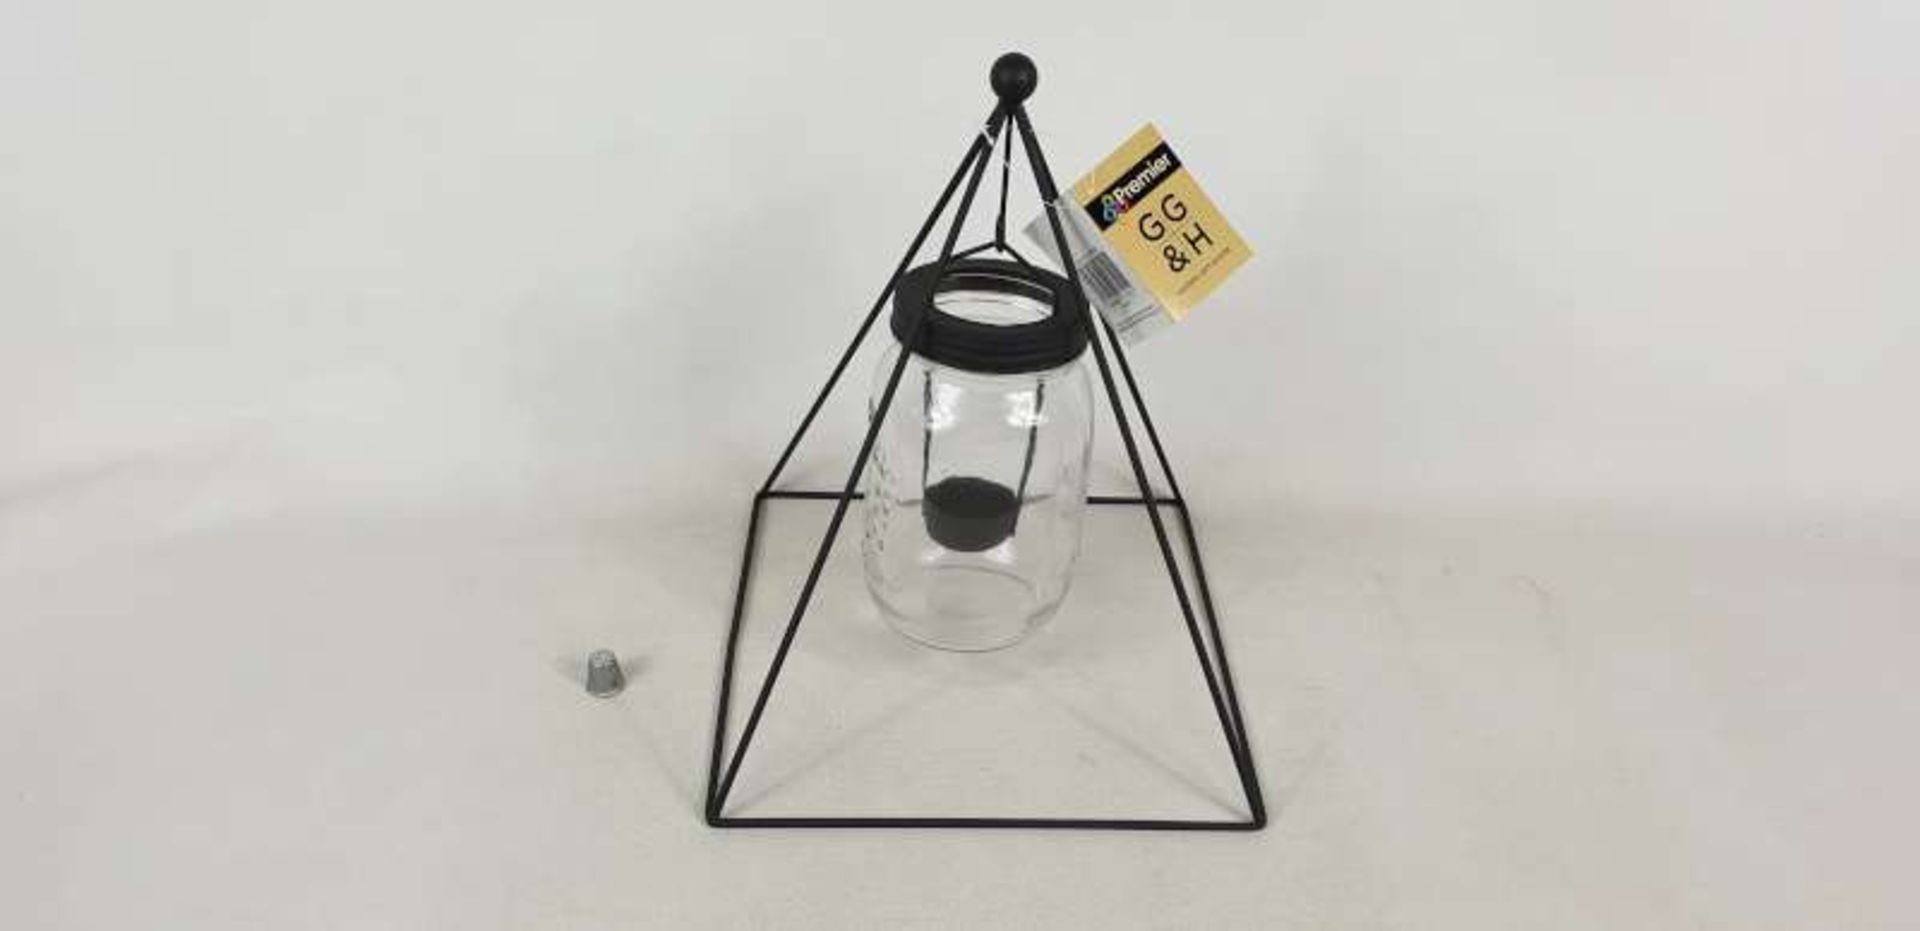 24 X PREMIER METAL PYRAMID WITH HANGING GLASS TEA LIGHT HOLDERS